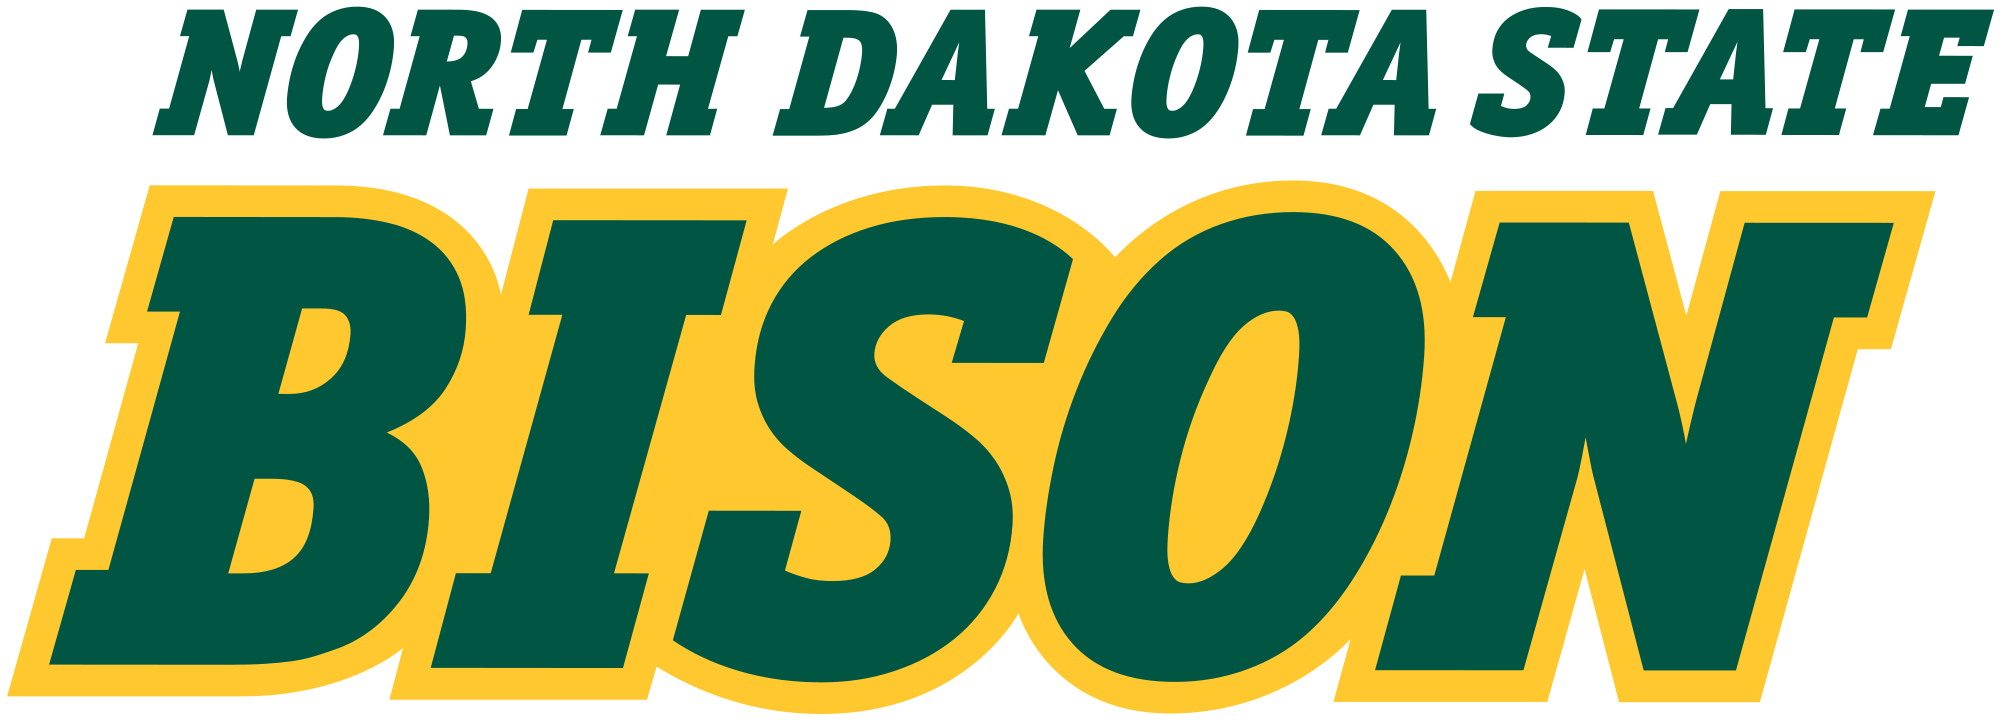 Bison Football Logo - North Dakota State Bison wordmark.svg